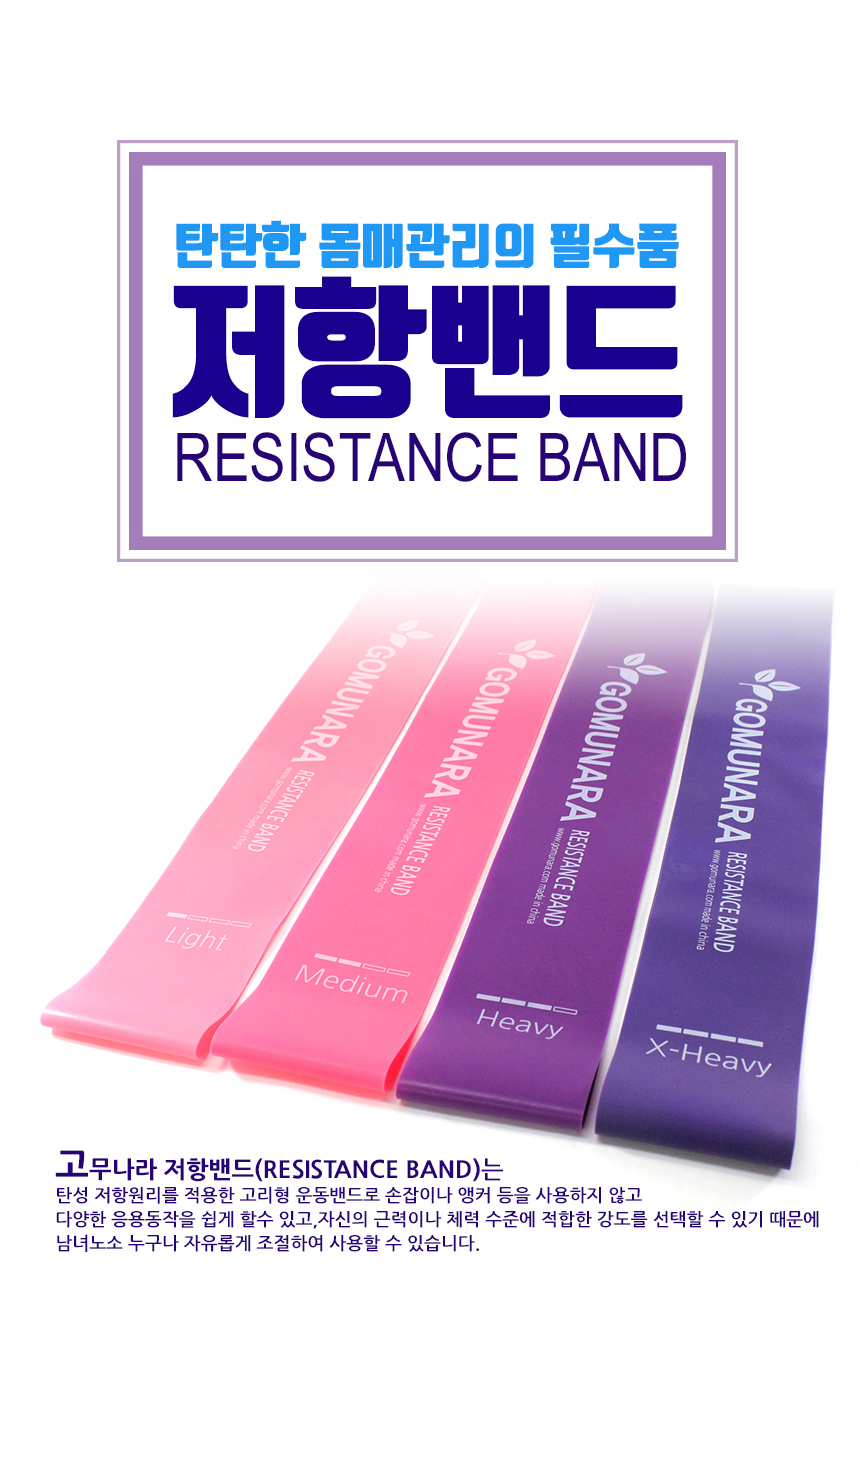 resistanceband_01.jpg